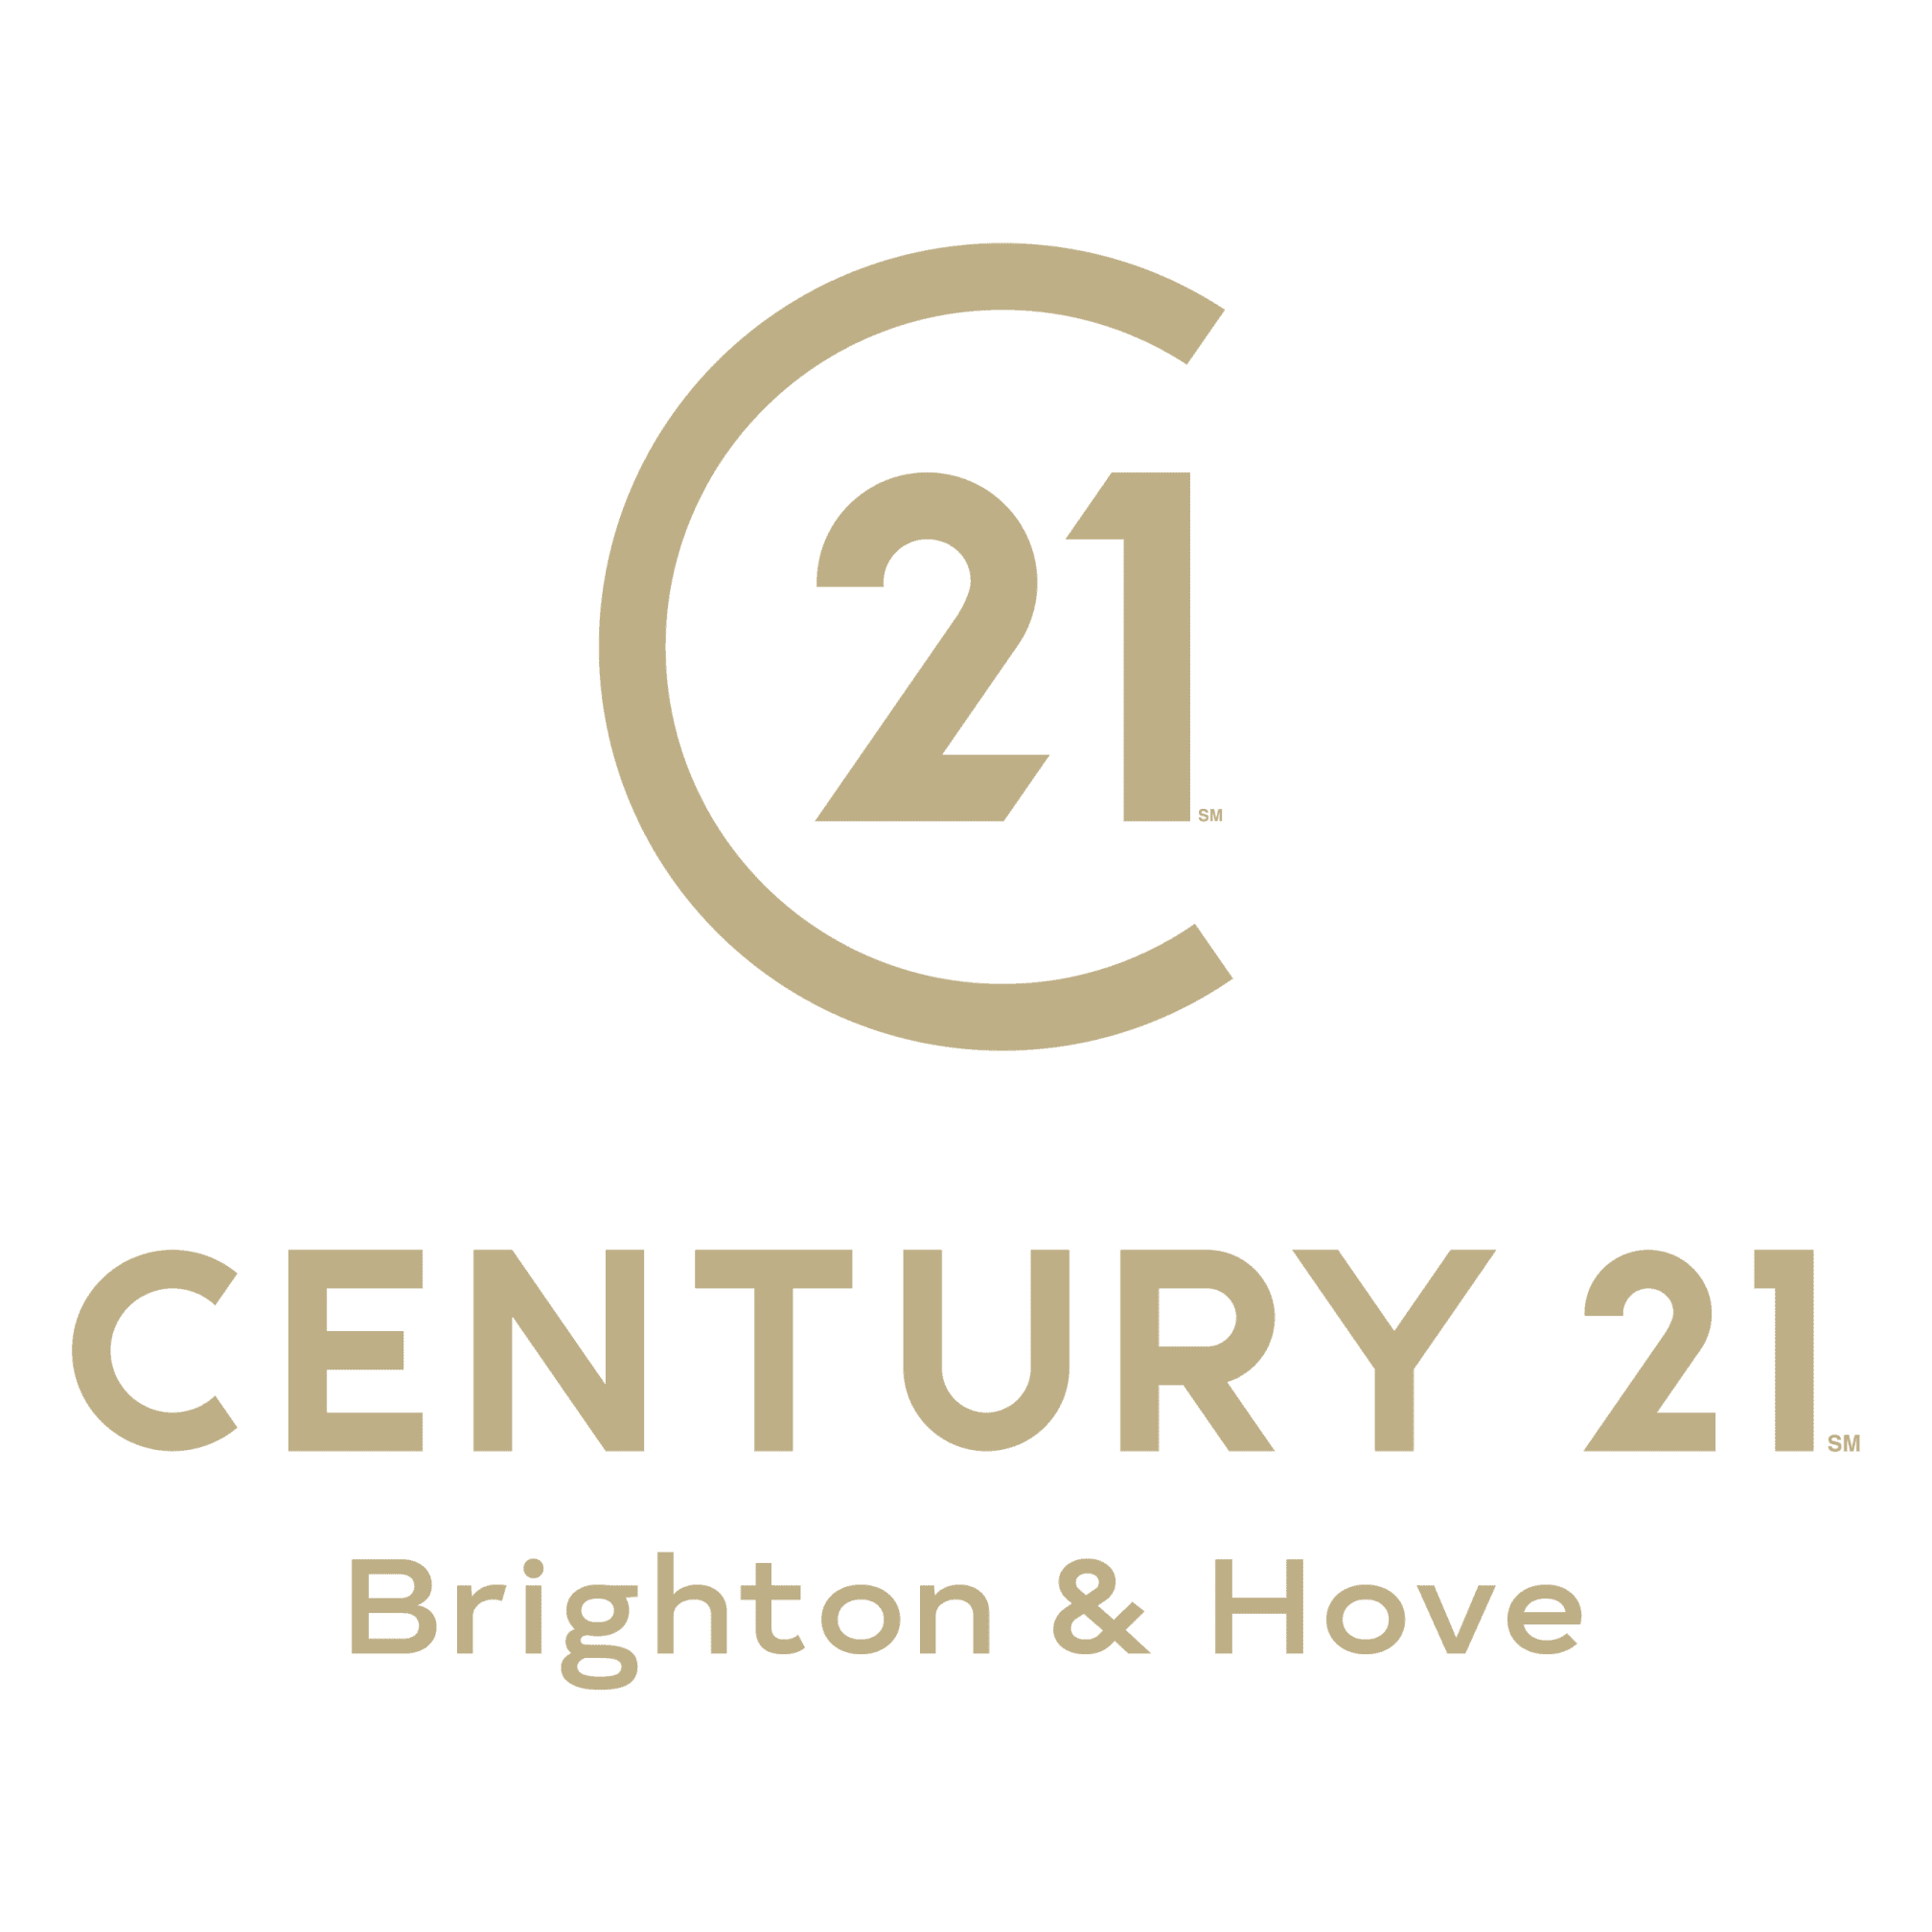 21 century недвижимость. Сенчури 21 логотип. Century 21 агентство недвижимости. 21 Век логотип. Century 21 СПБ.